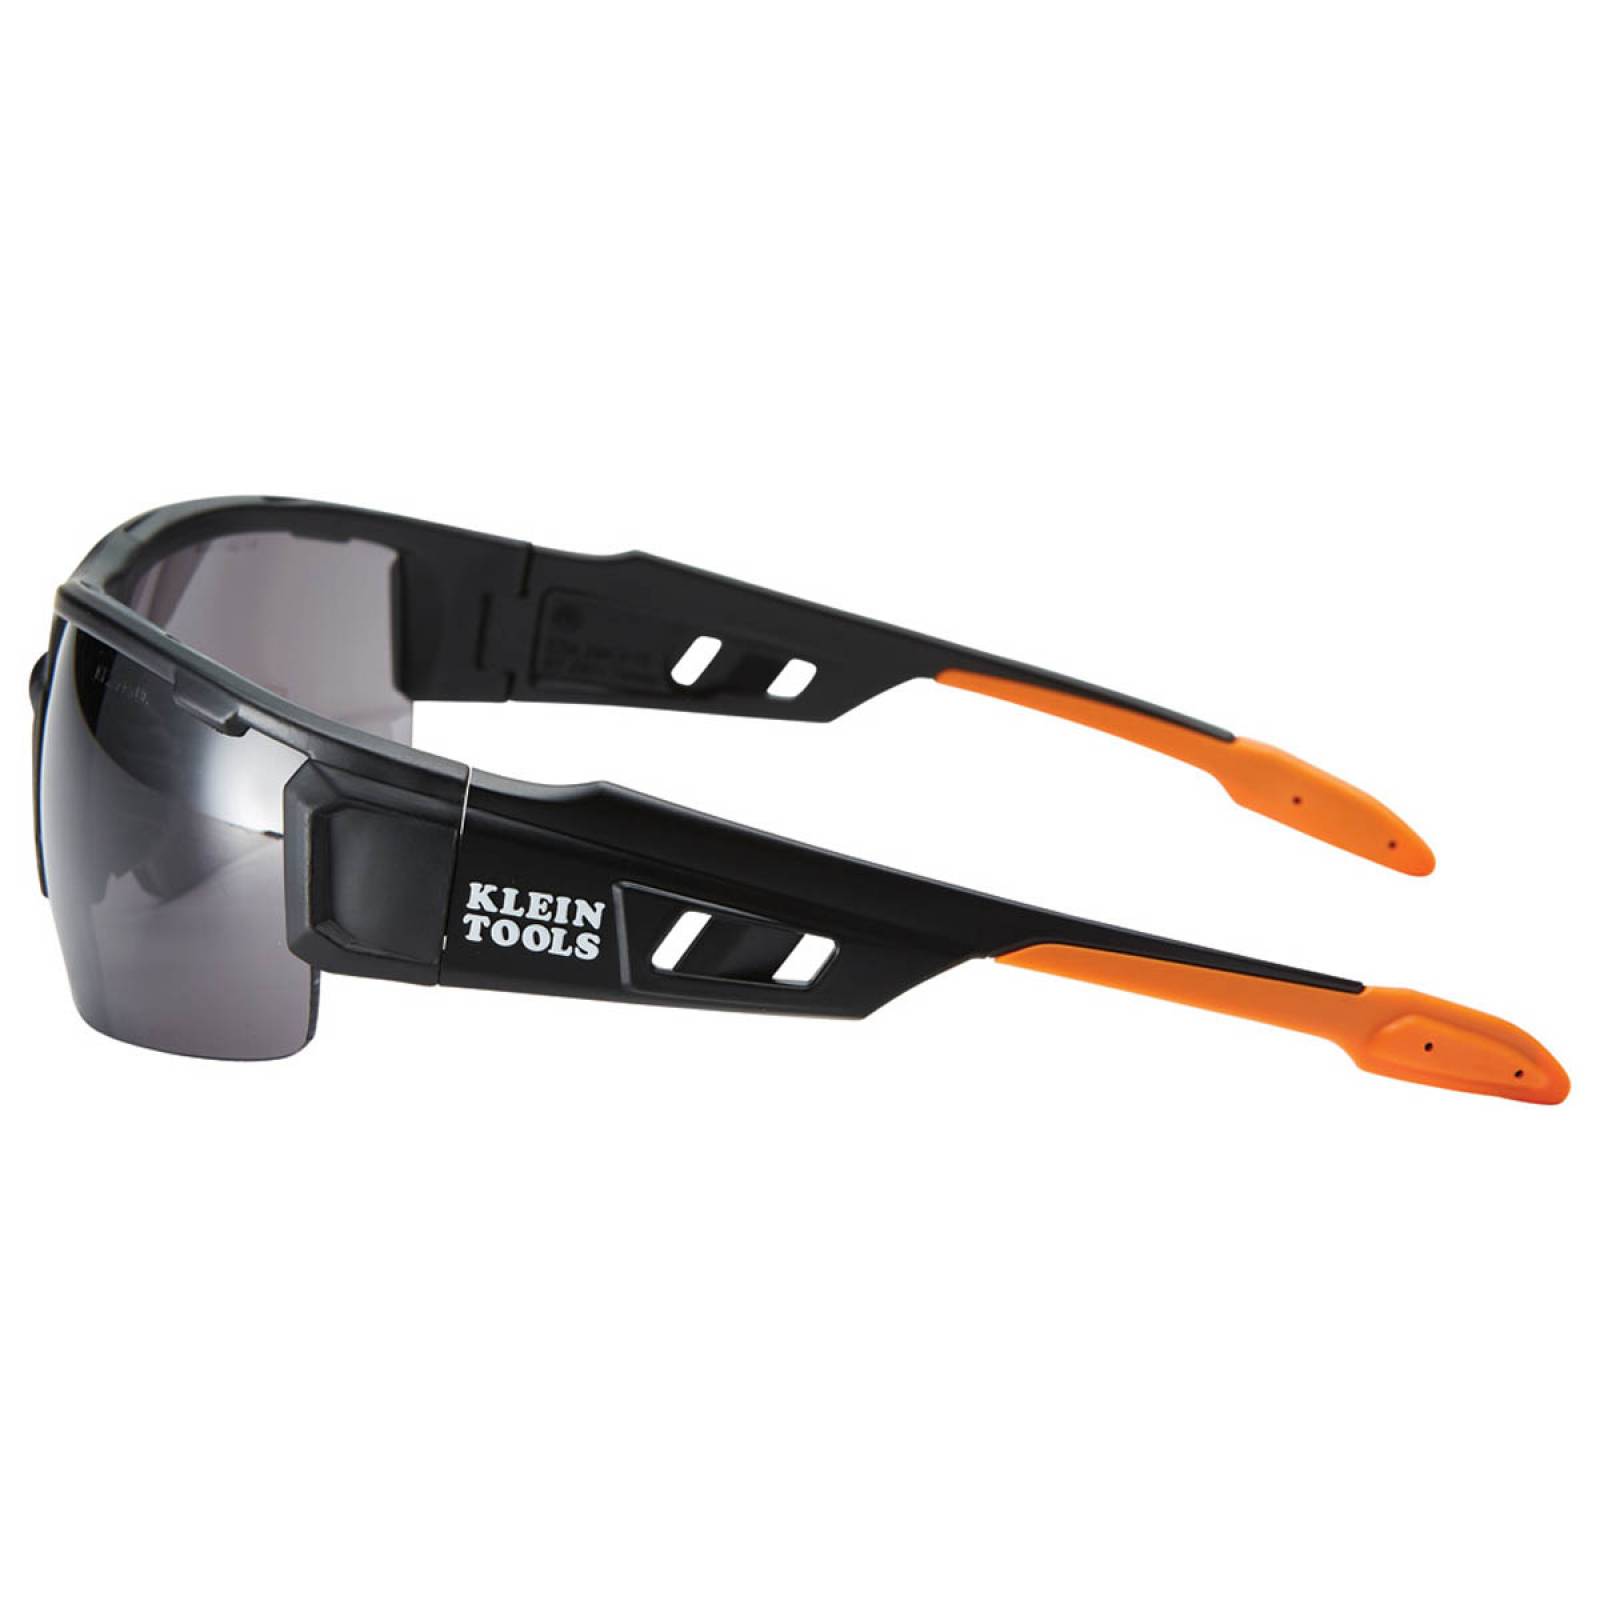 Gafas Seguridad Pro Semimarco Transparente Gris Klein Tools 